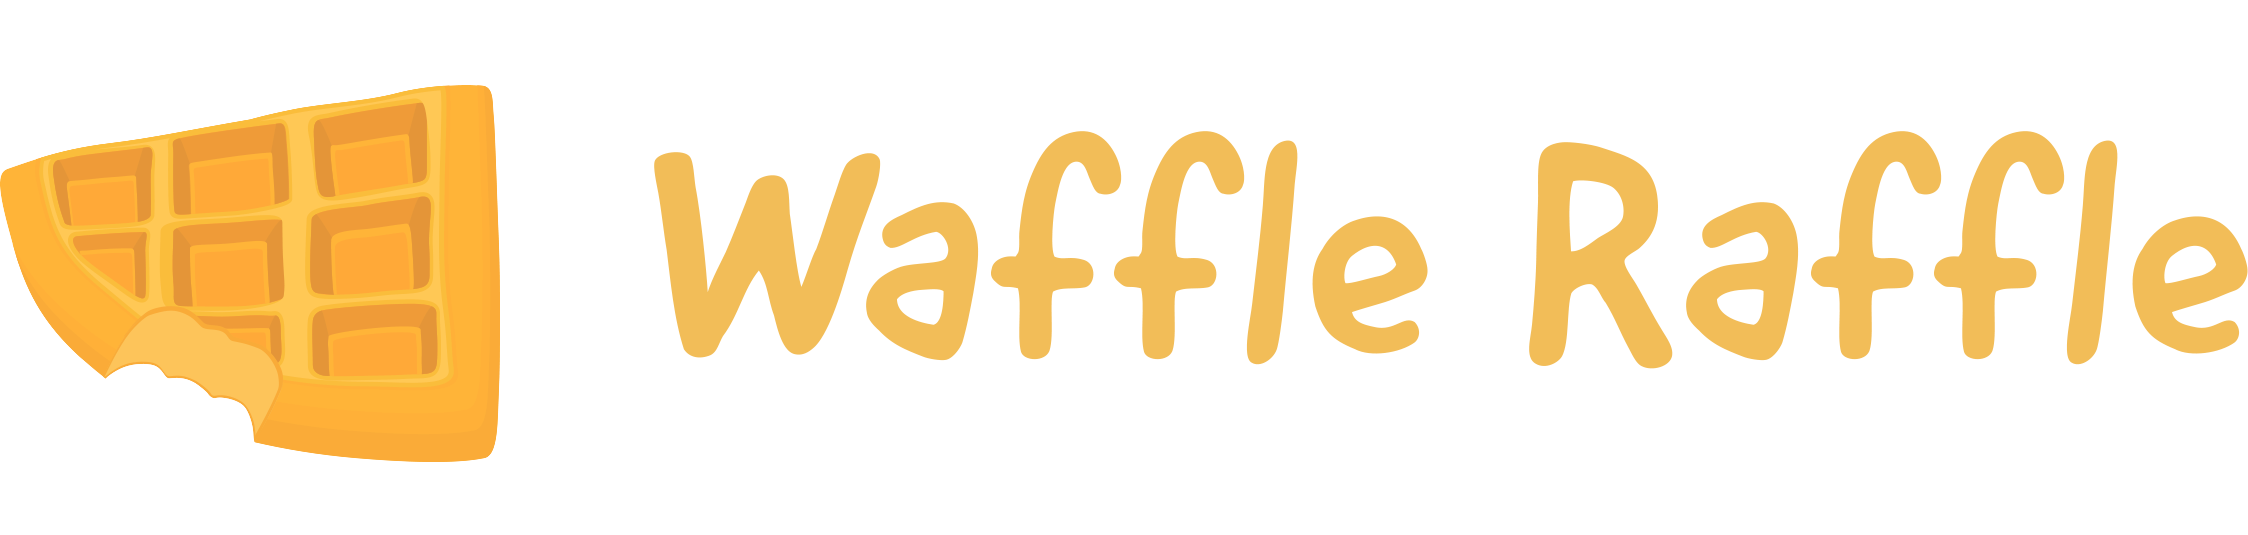 Waffle Raffle